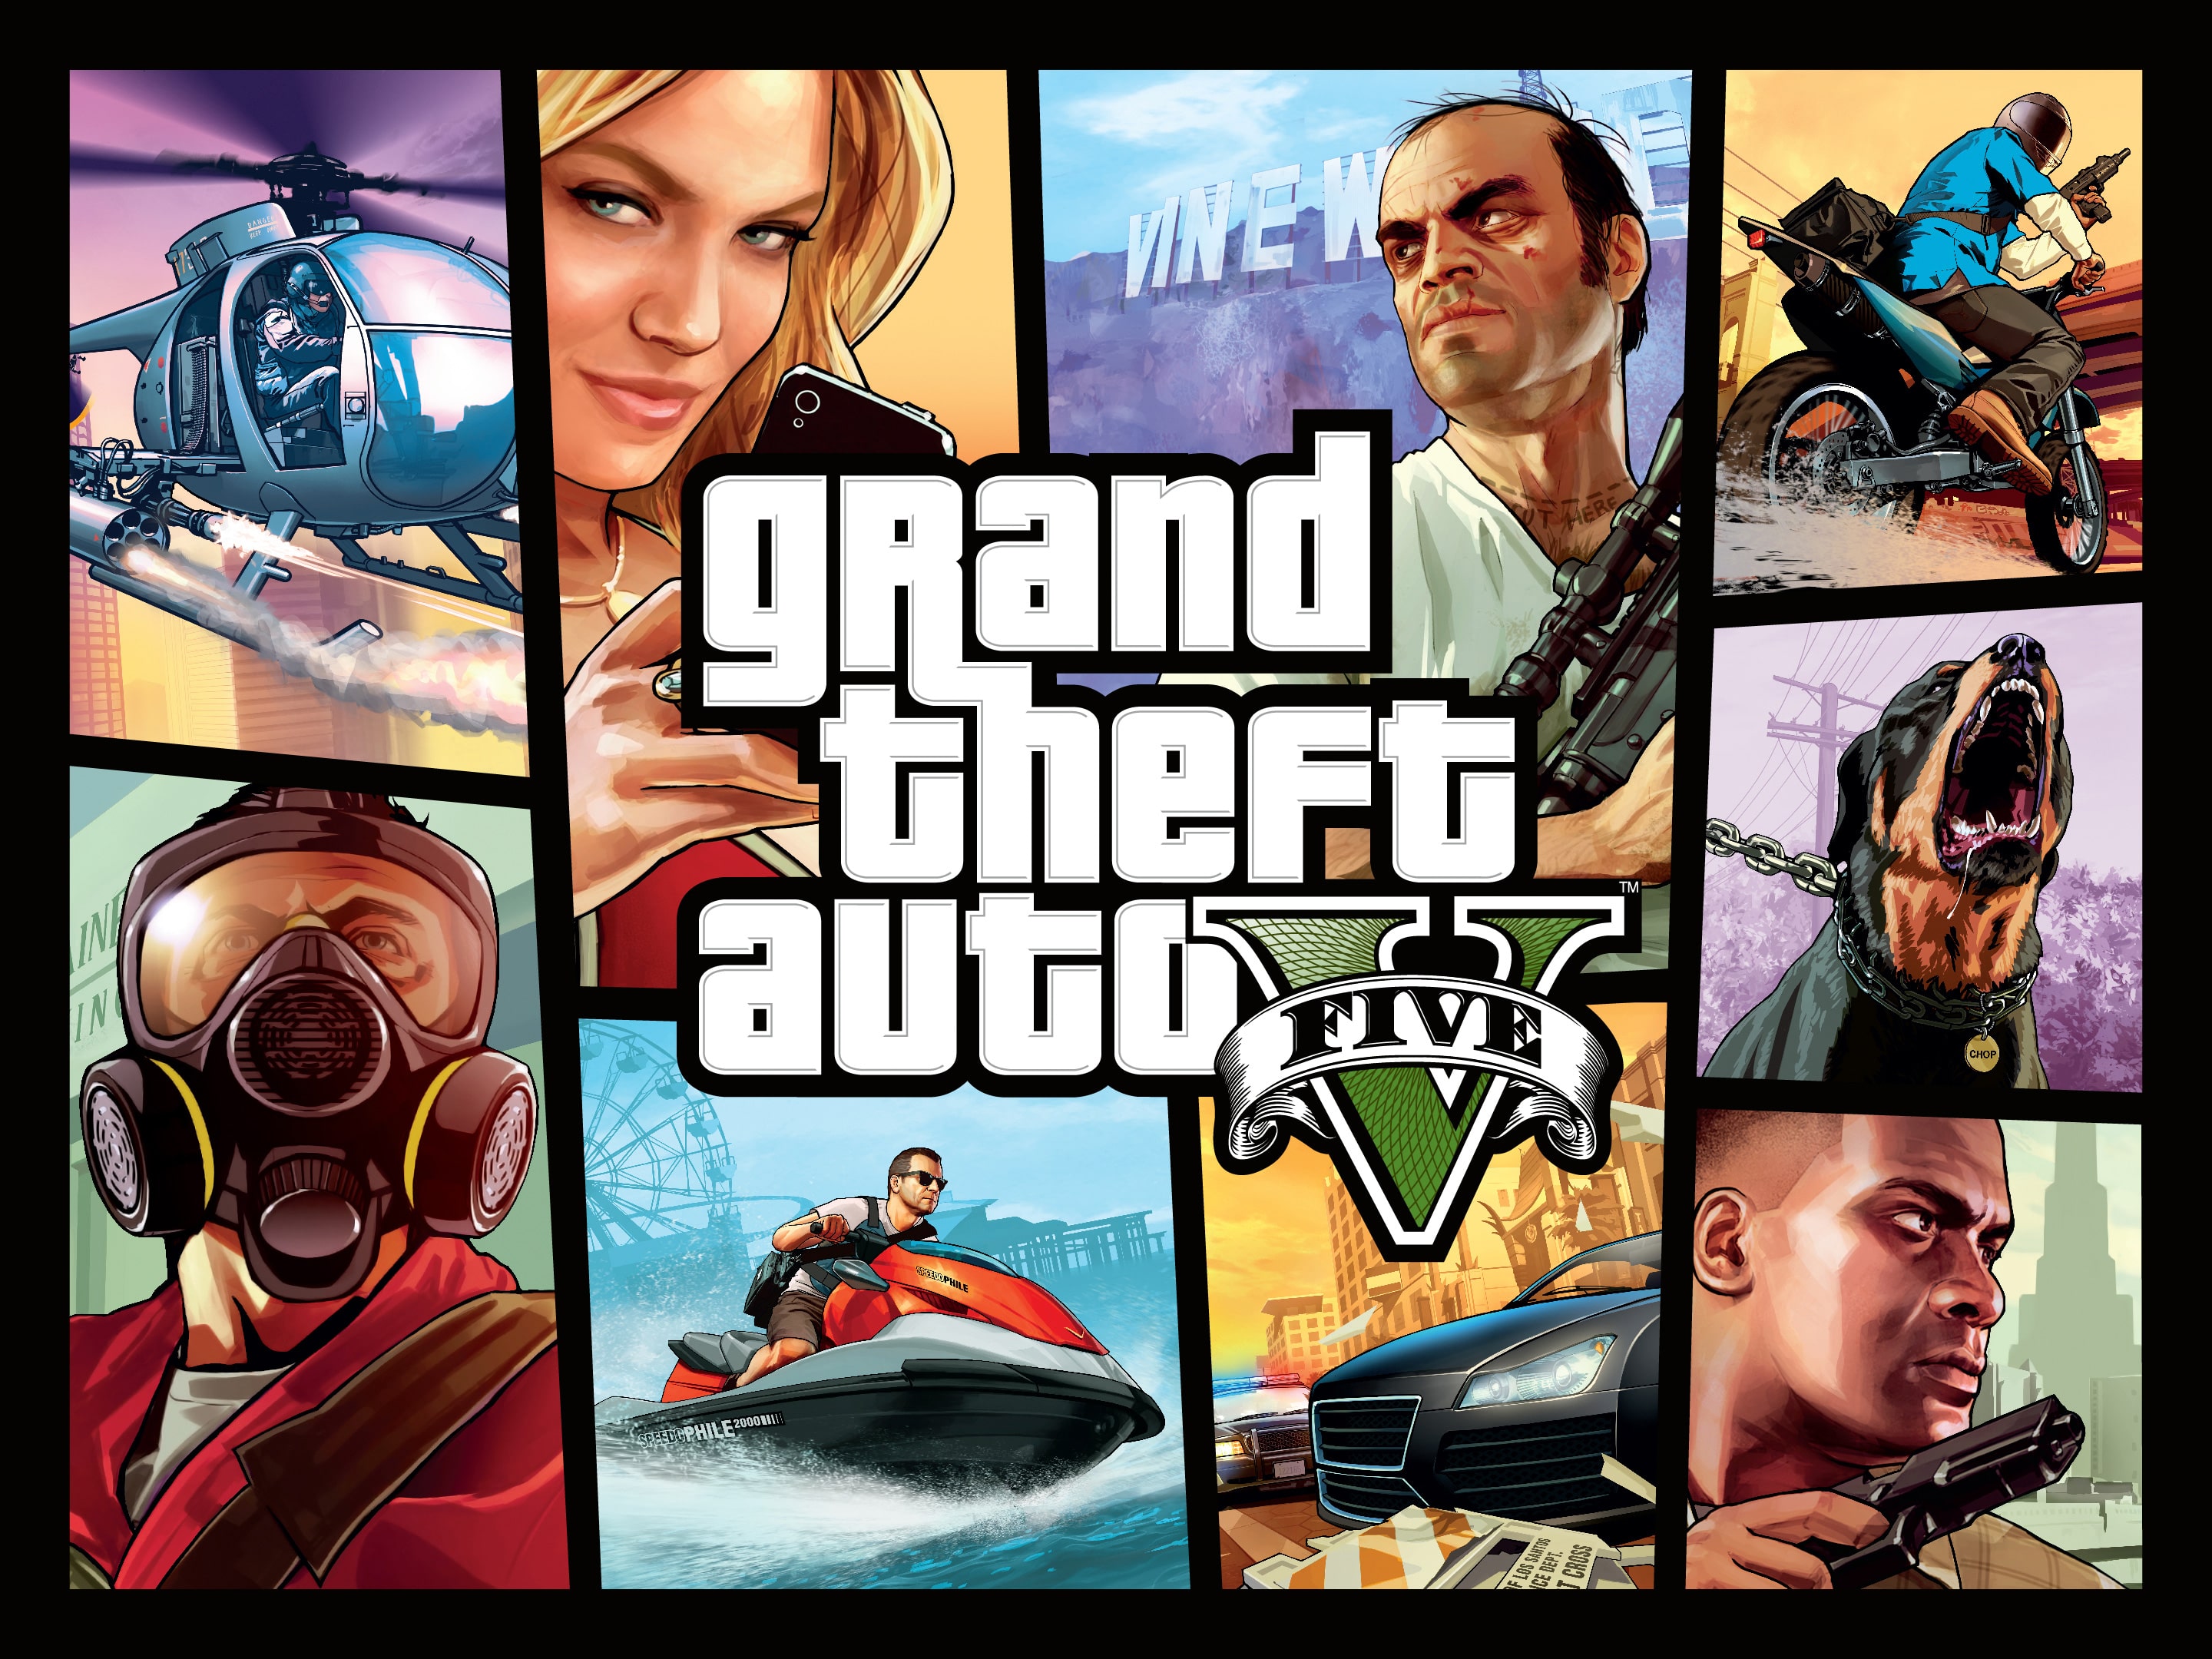 Grand Theft Auto V: Premium Edition